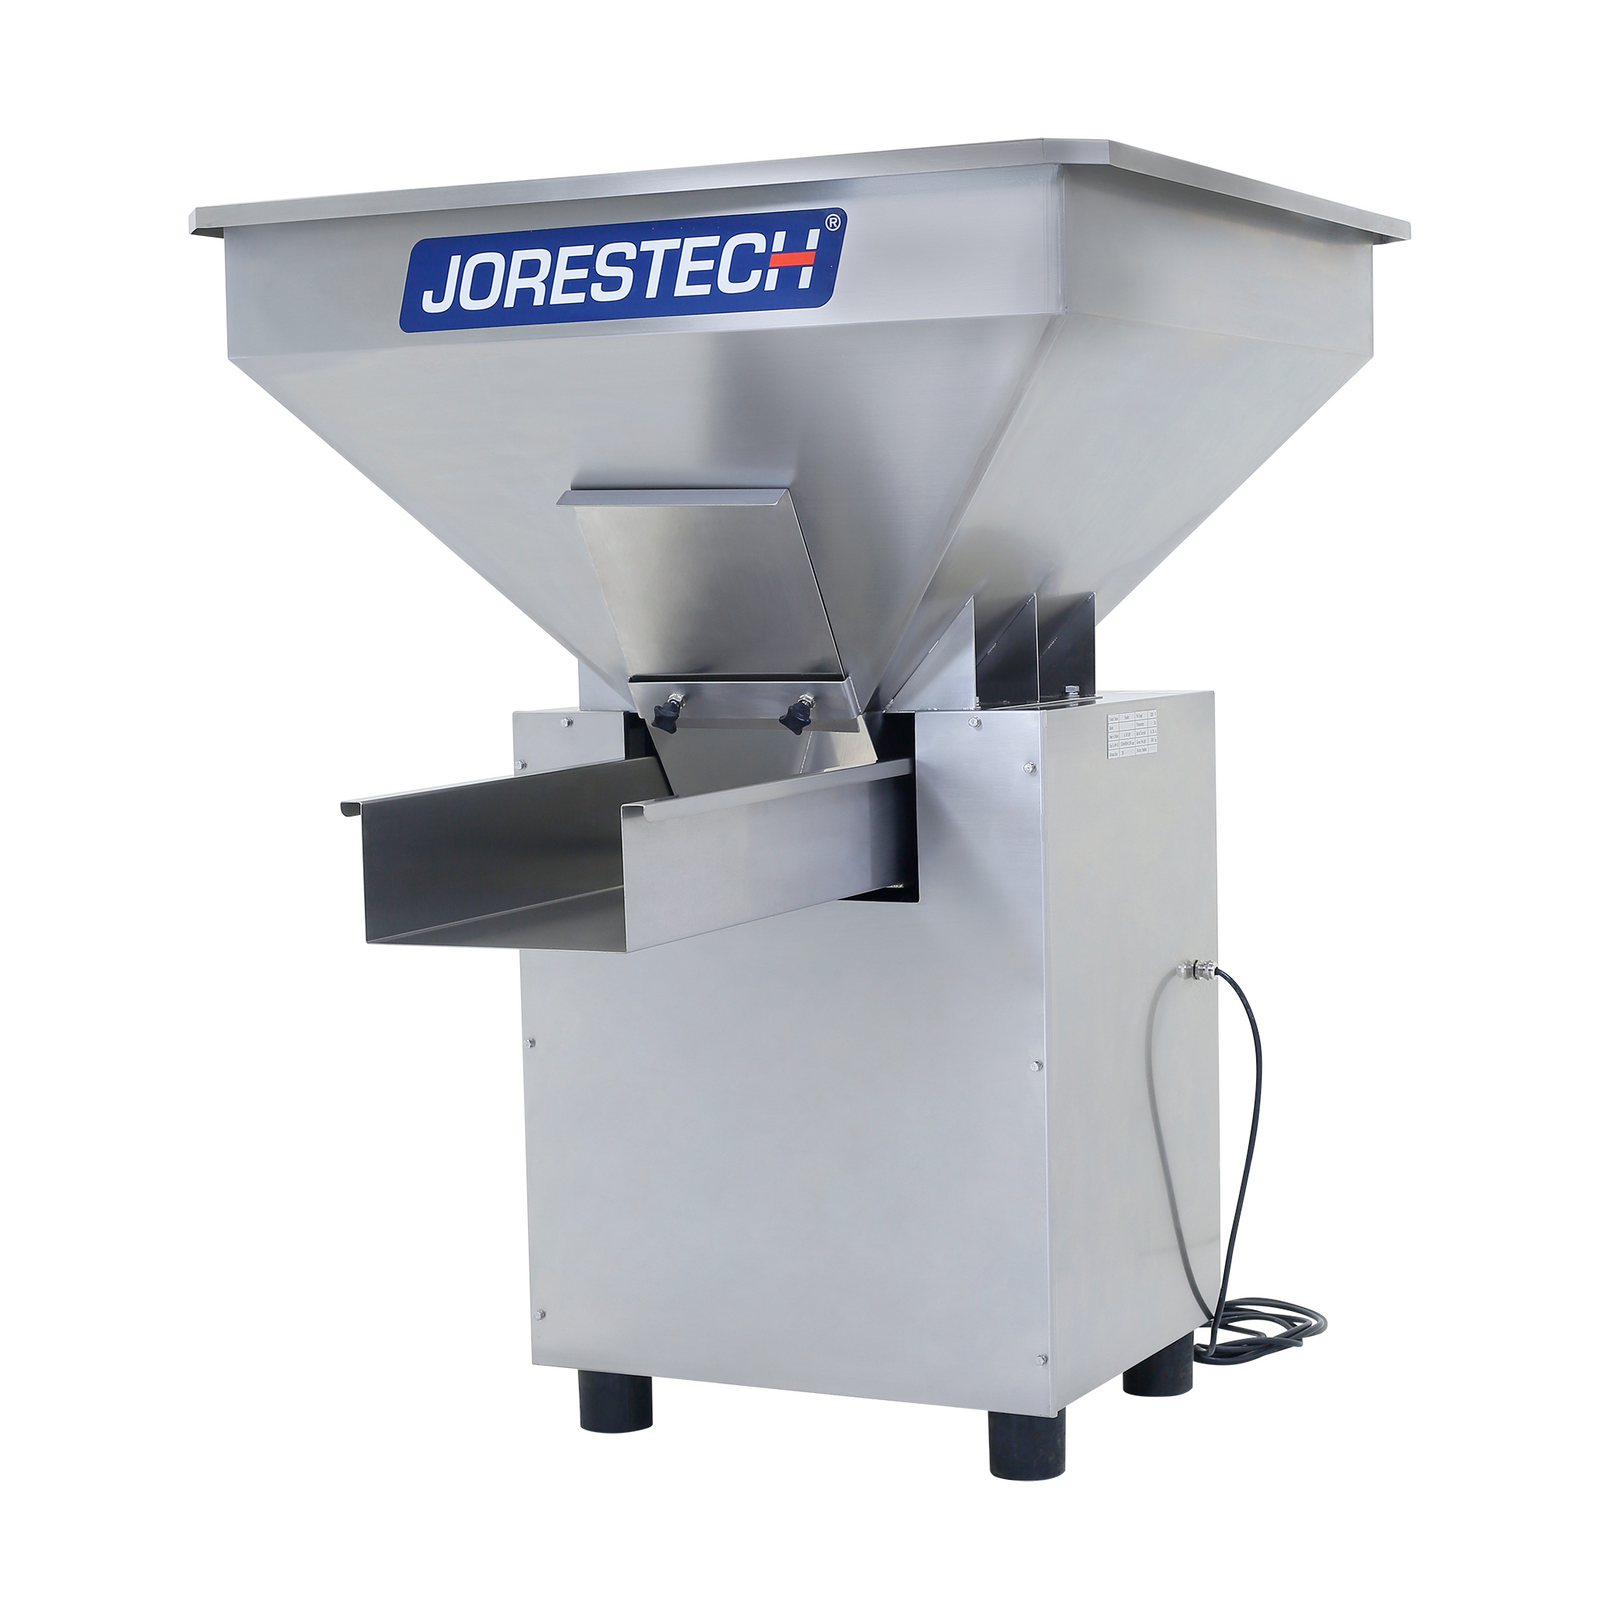 The JORES TECHNOLOGIES® stainless steel vibratory hopper feeder for bucket elevator